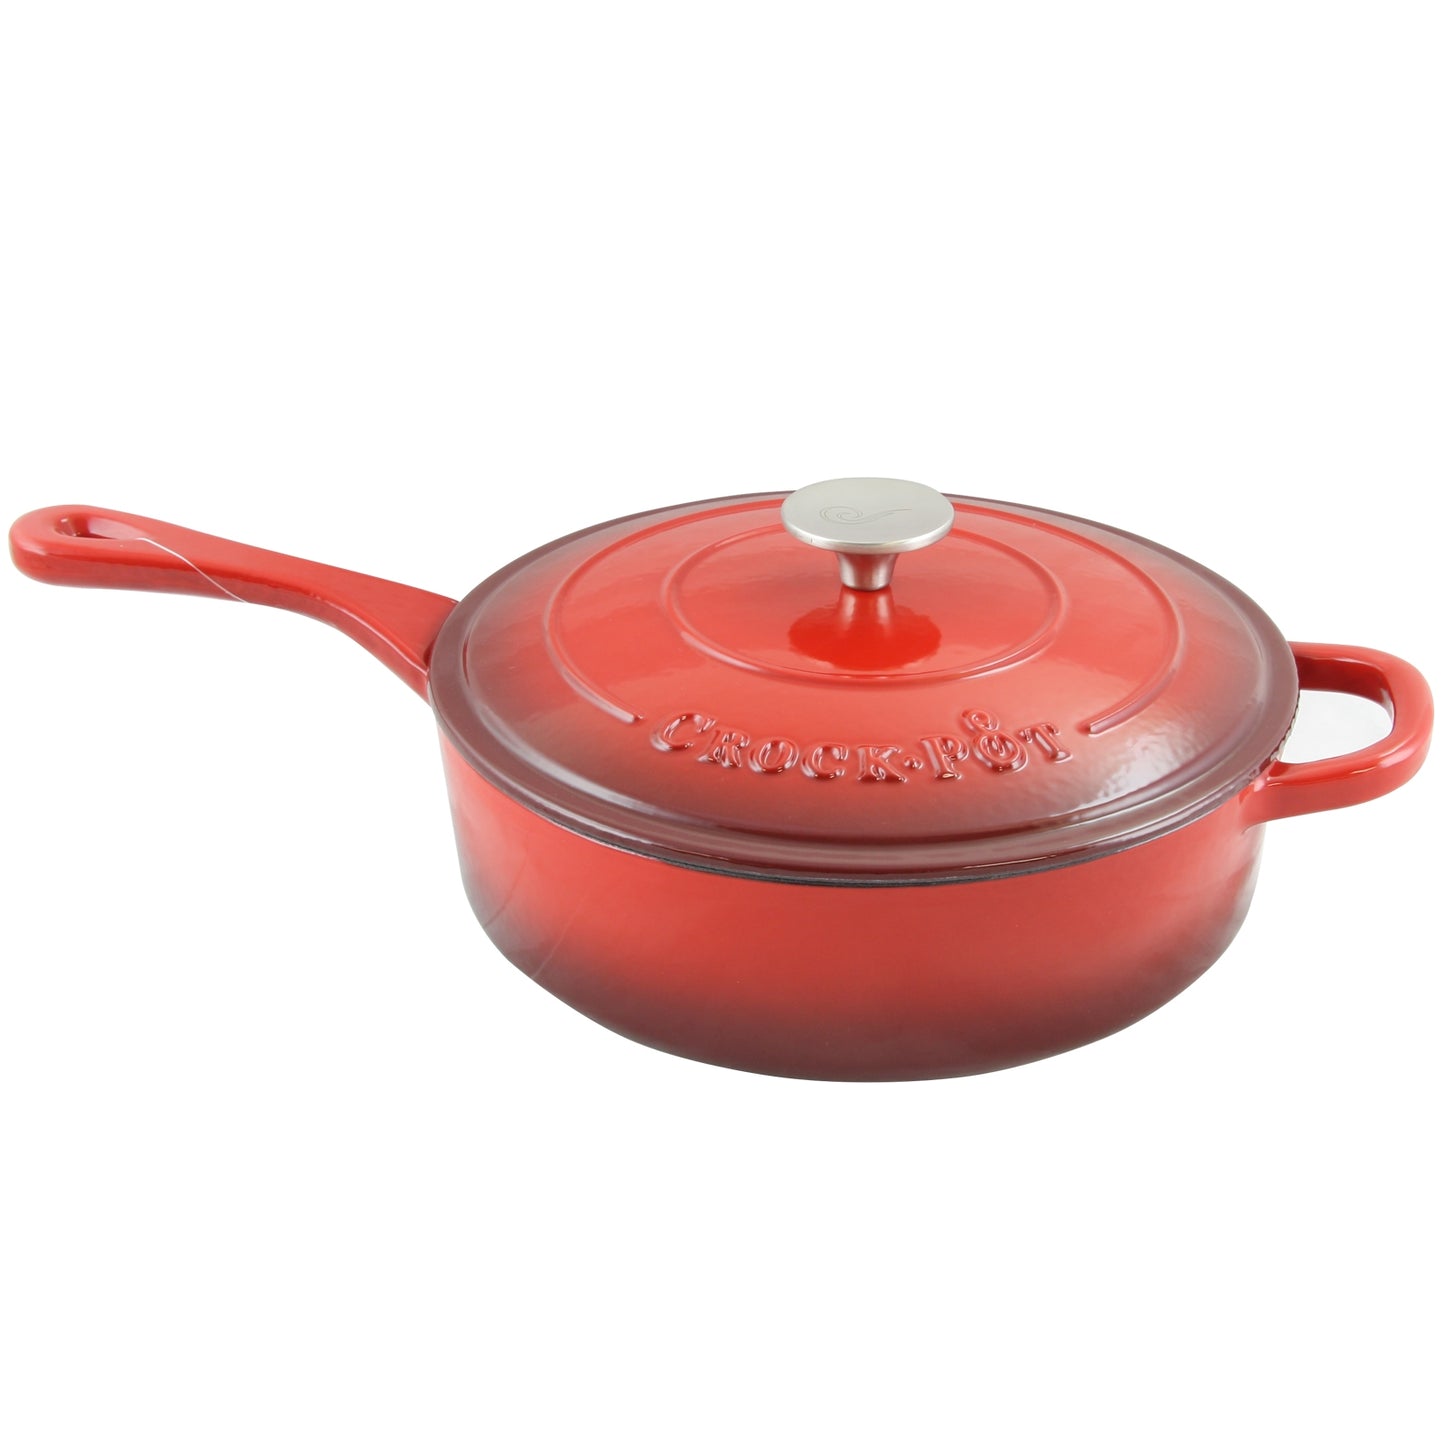 Crock Pot Artisan 3.5 Quart Enameled Cast Iron Deep Saut Pan With Self Basting Lid in Scarlet Red